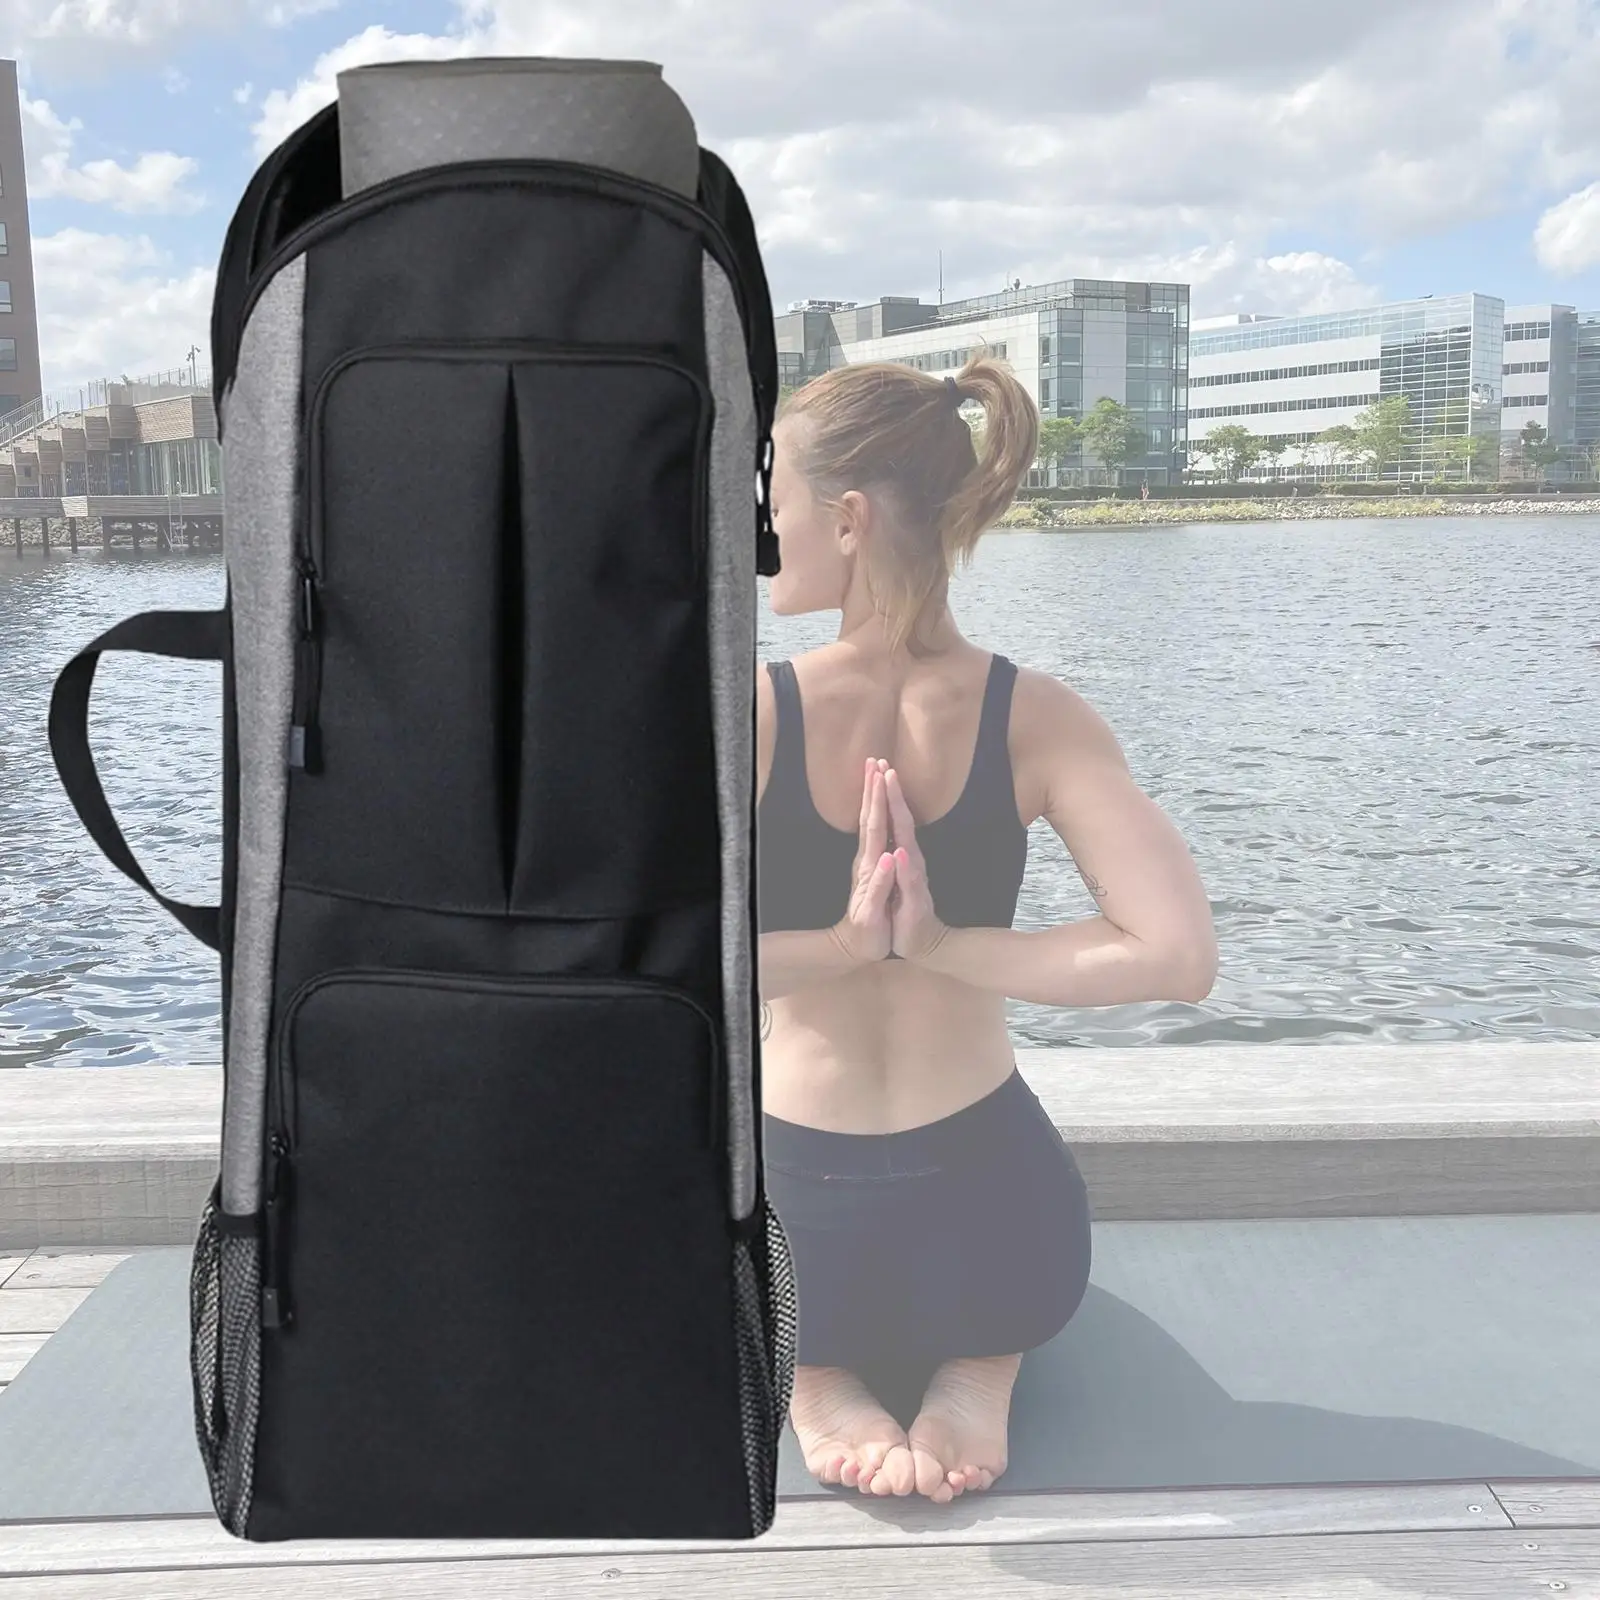 Portable Gym Bag Travel Duffel Bag Adjustable Strap Workout Tote Handbag Large for Workout Weekend Camping Yoga Swimming